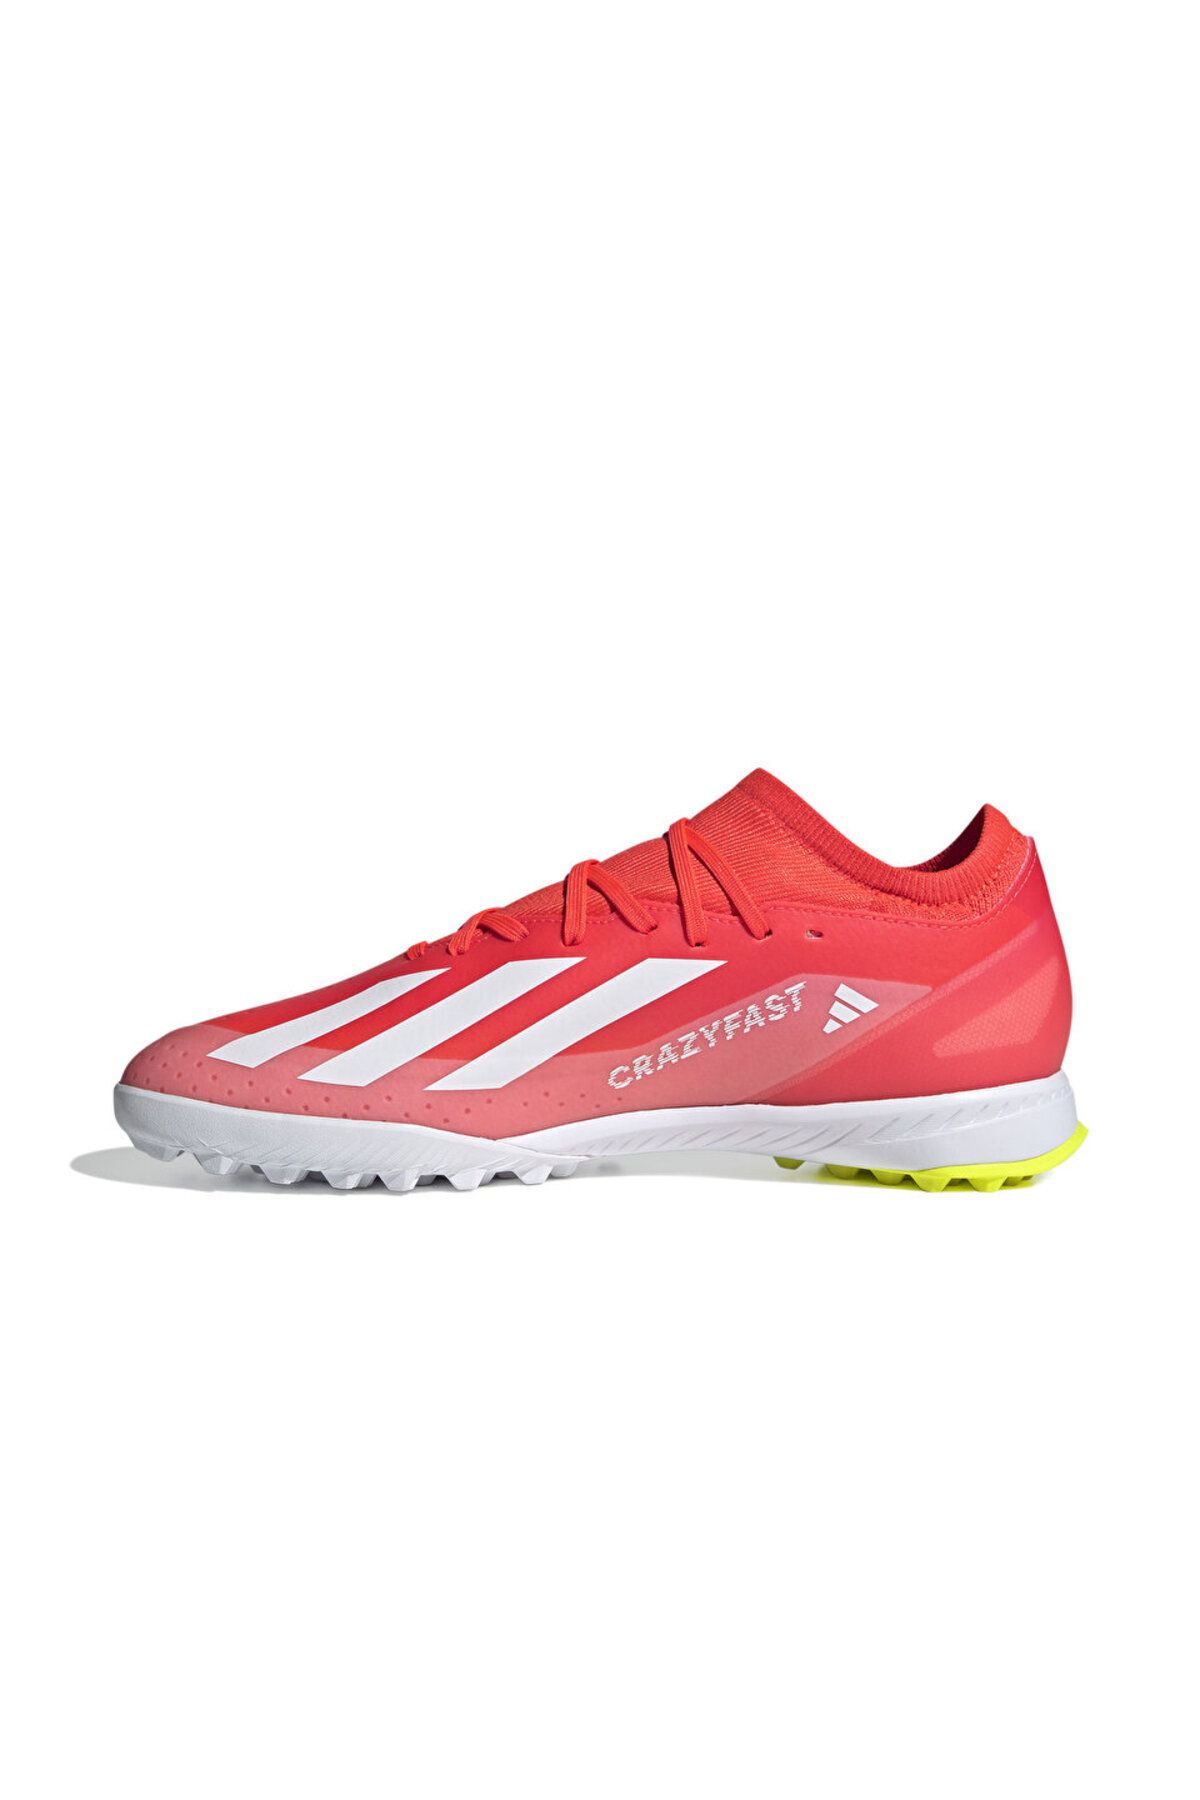 adidas X کفش های فرش مردانه لیگ دیوانه IF0699 قرمز